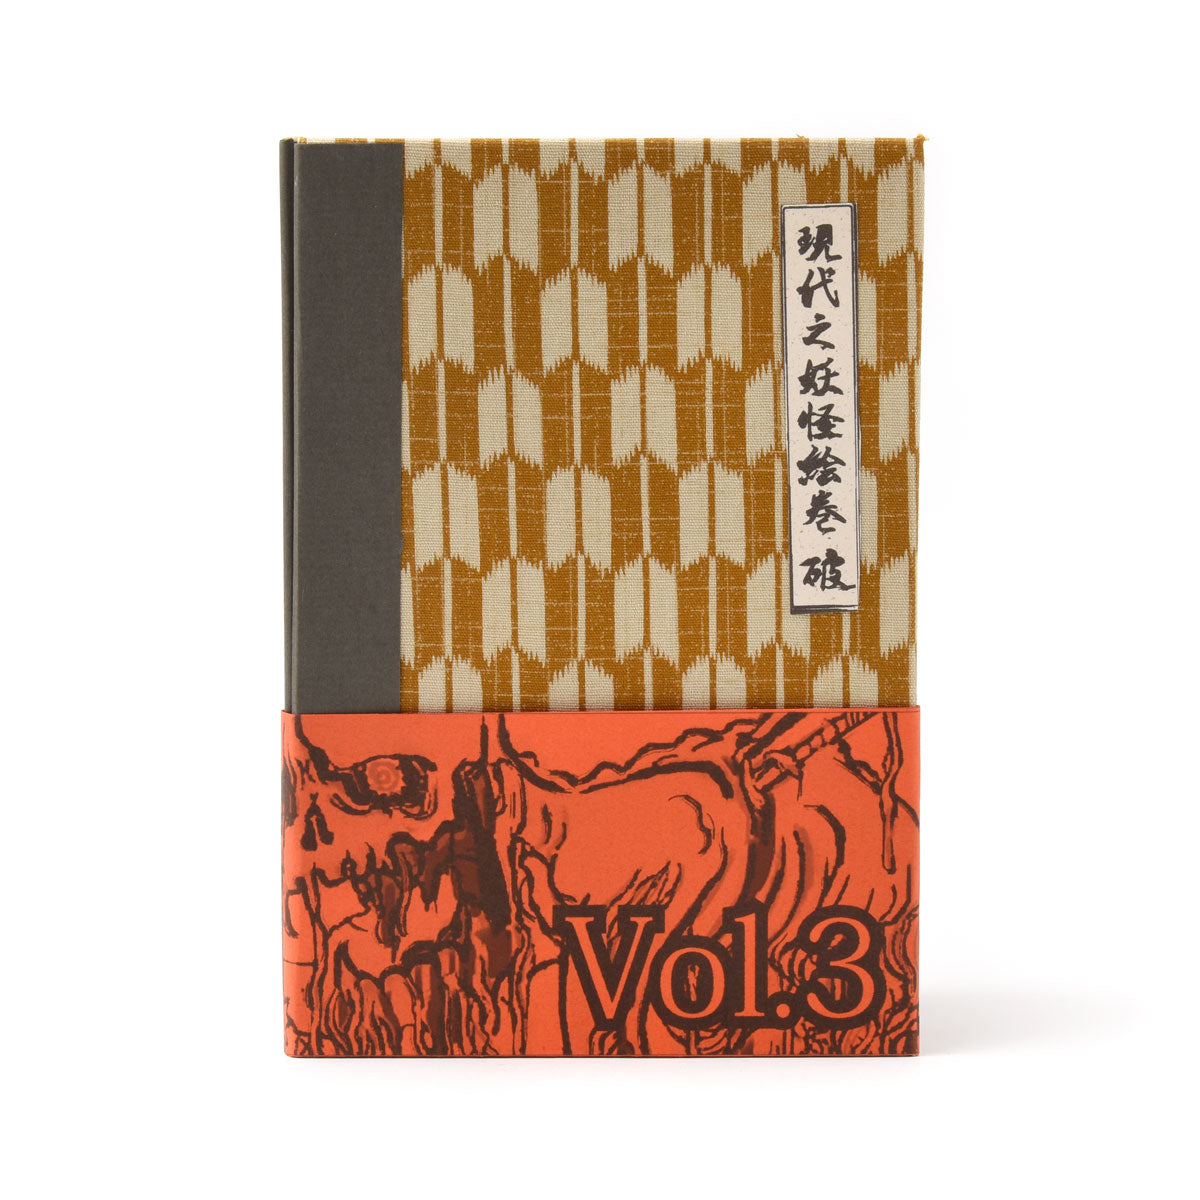 Yokai Volume Three